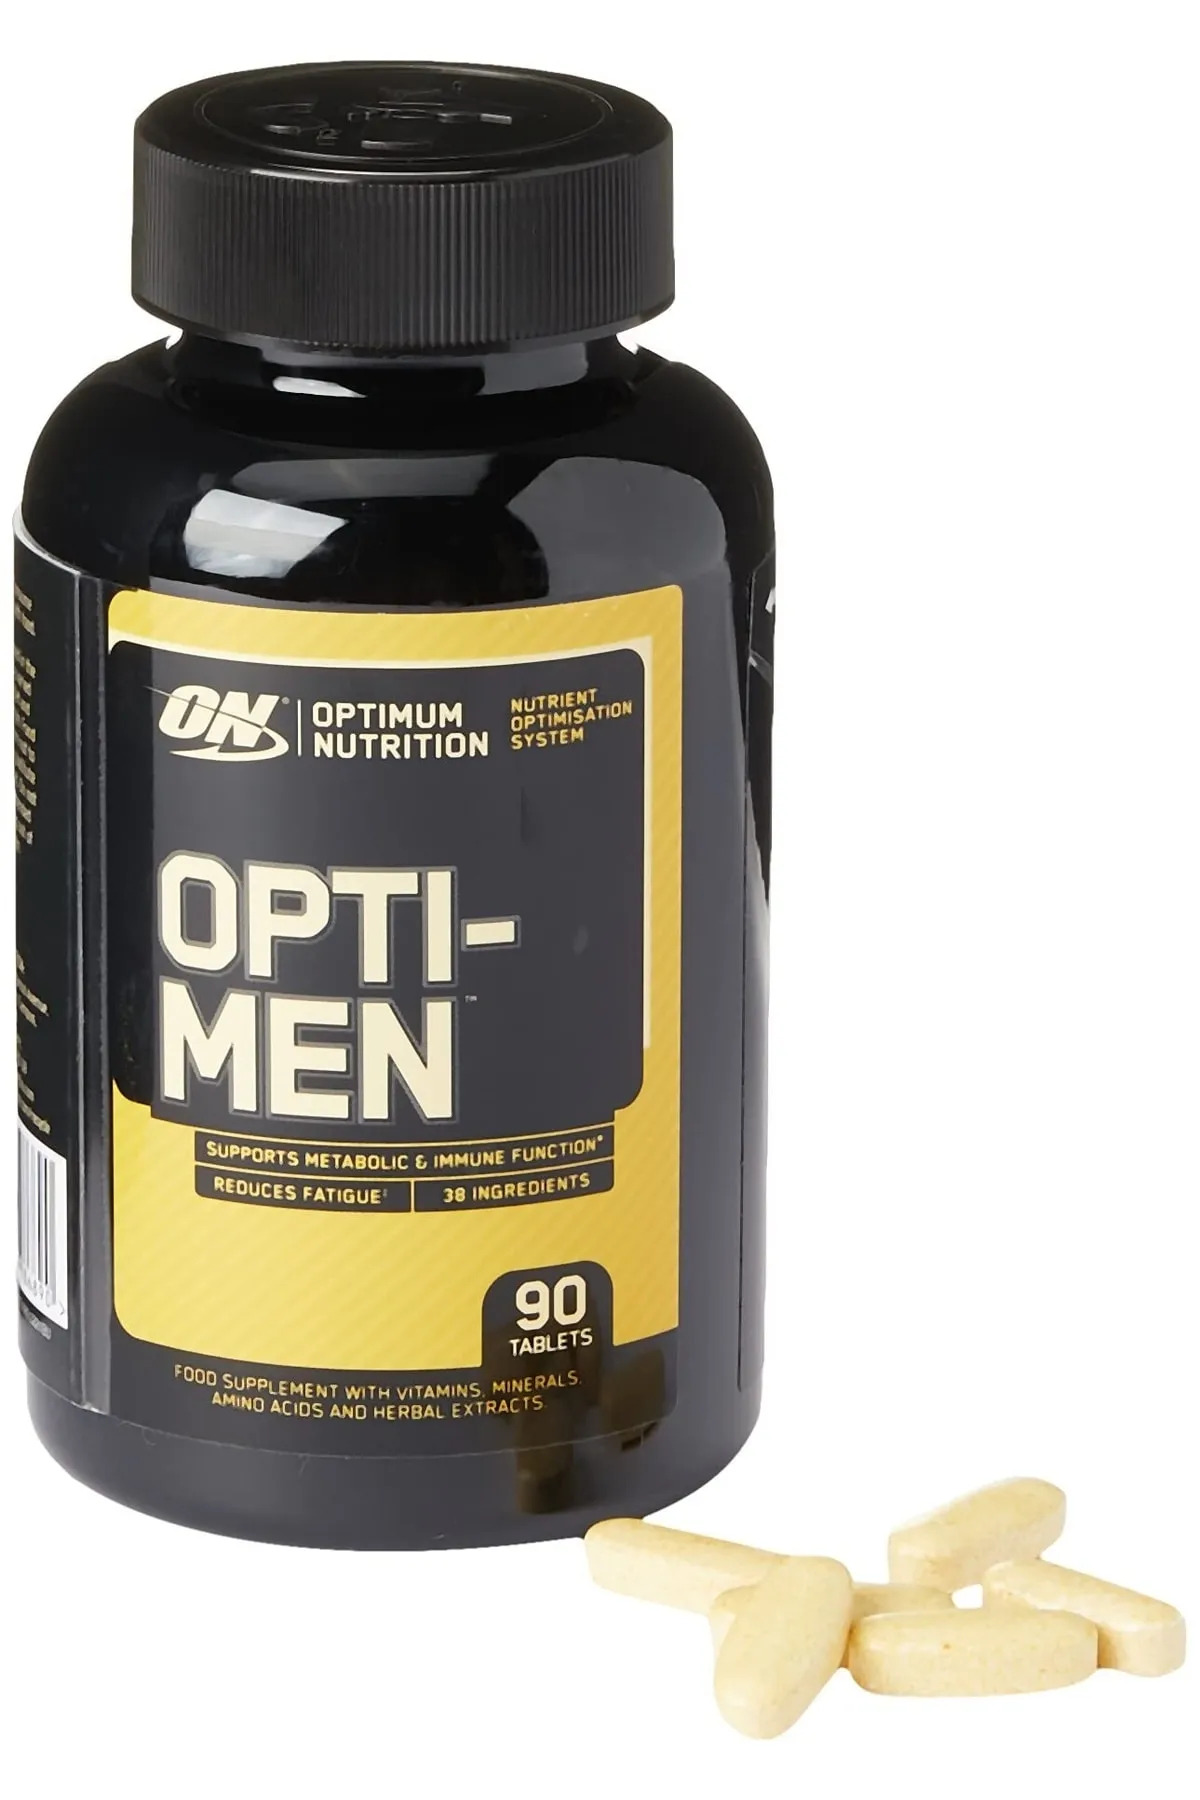 Optimum Nutrition Opti-men 90 Tablet